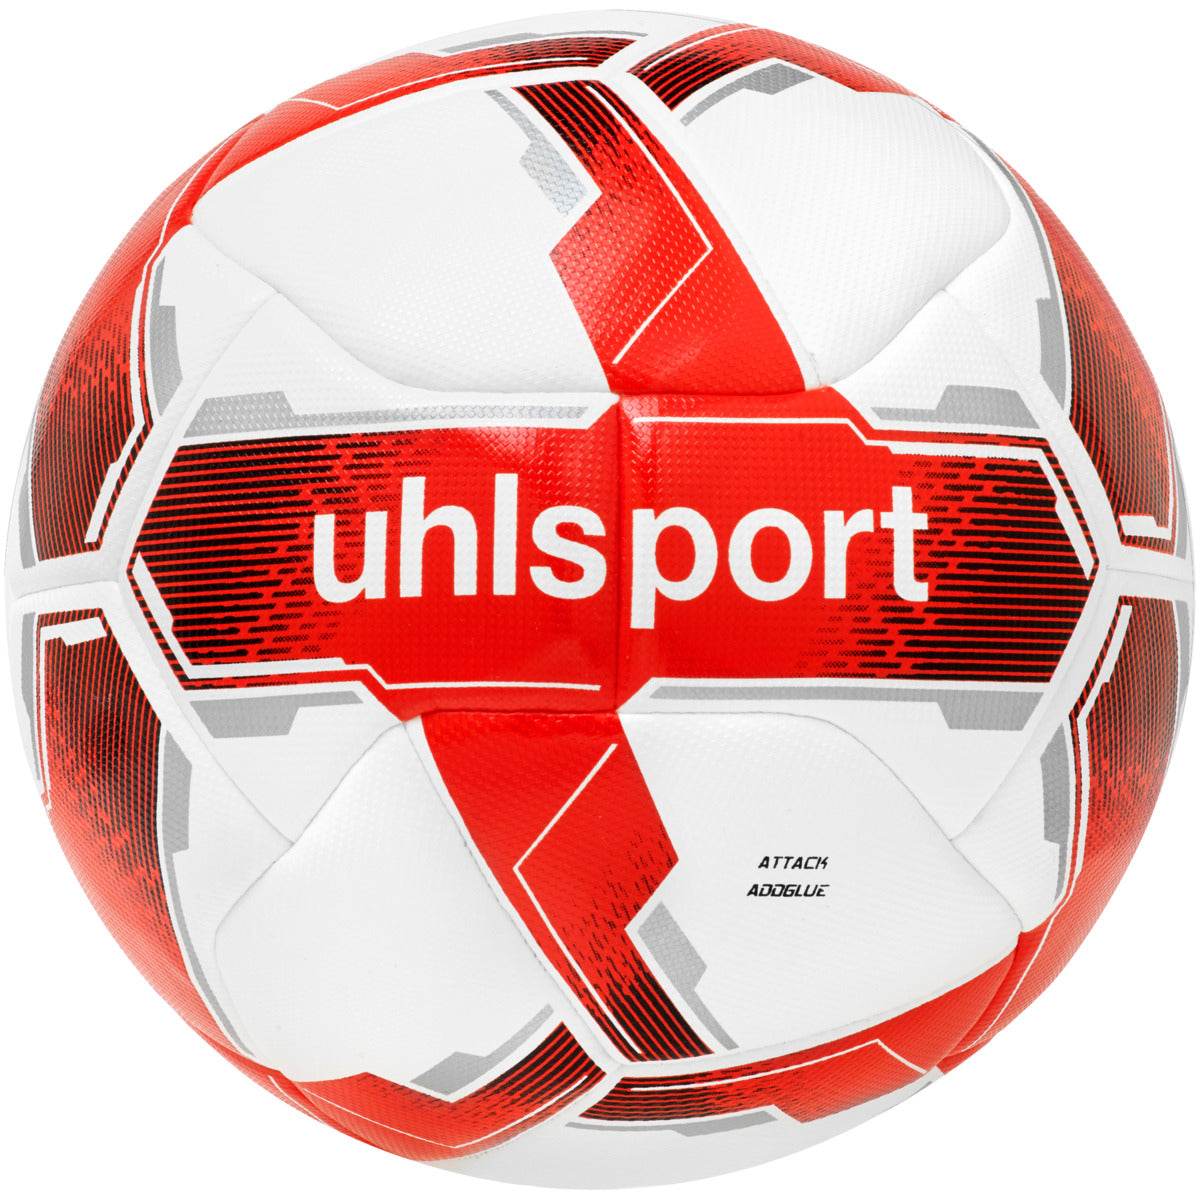 Uhlsport Attack Addglue  - White/Red